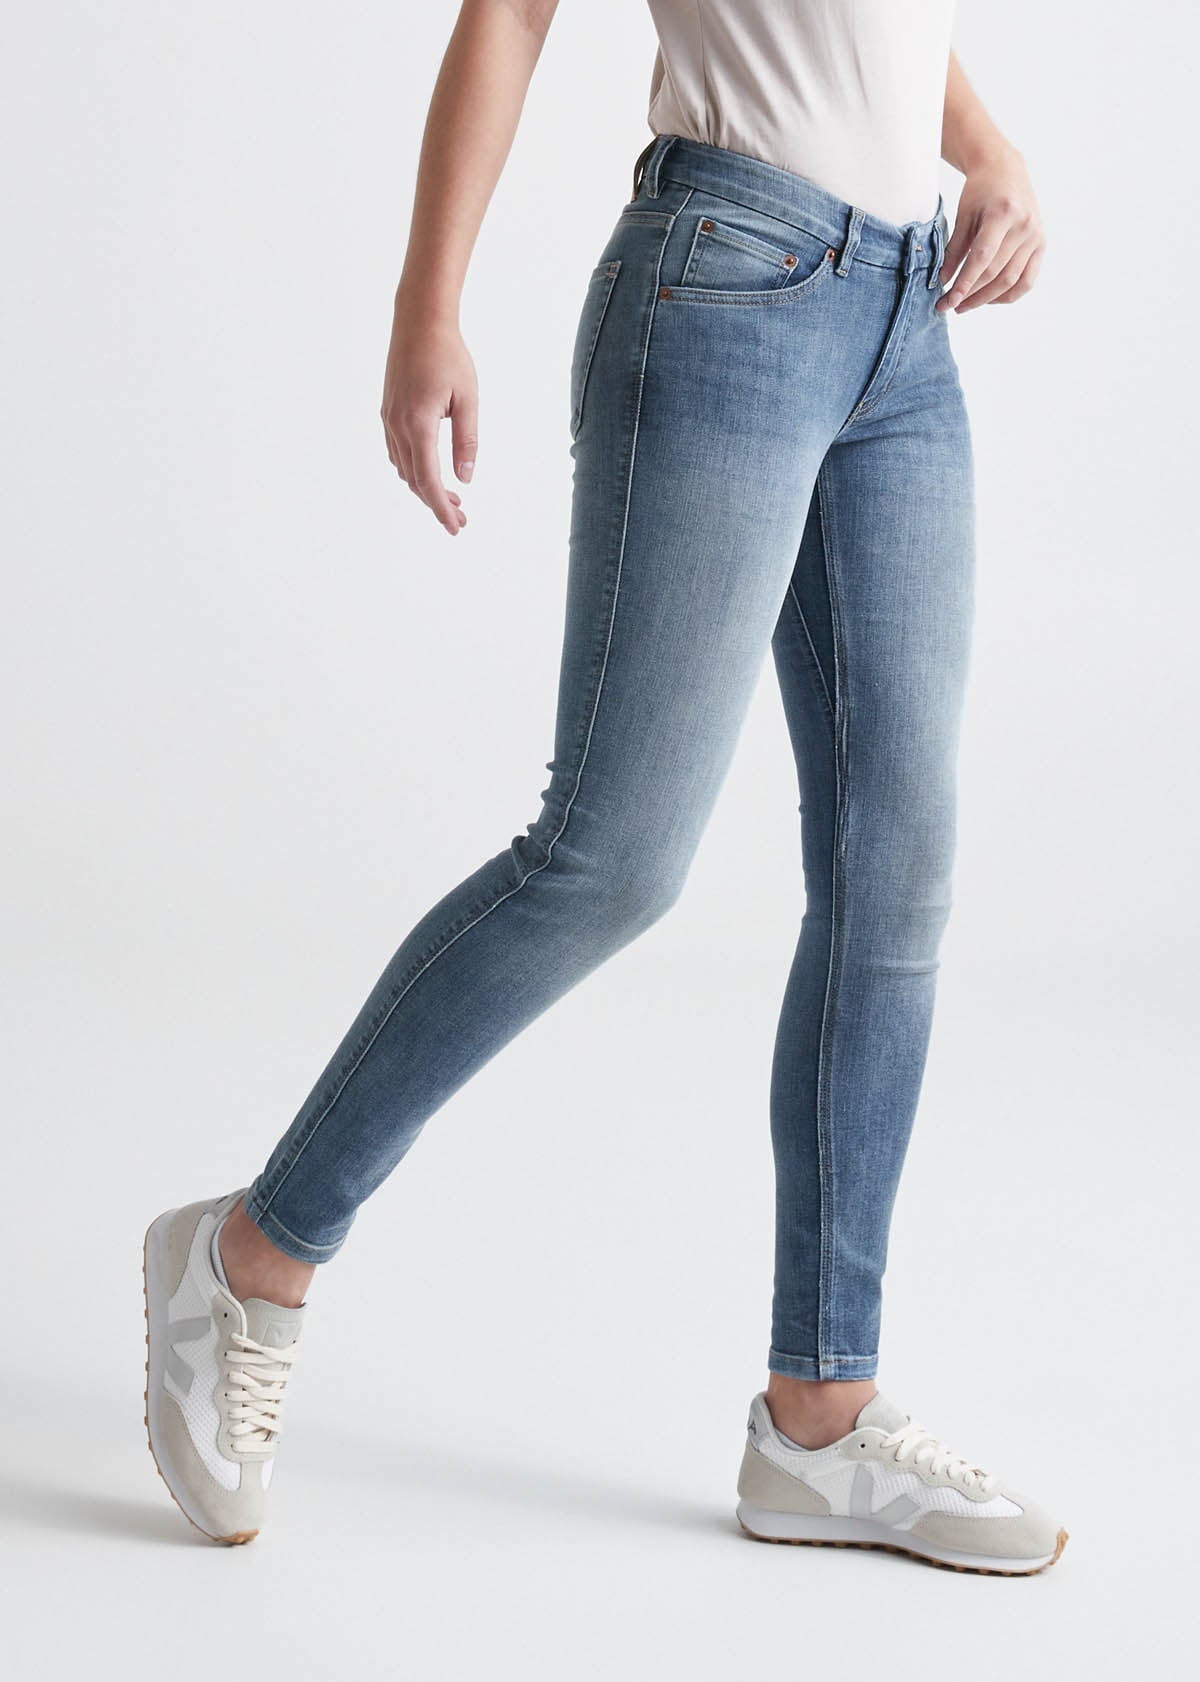 Mudd Womens FLX Stretch Blue Distressed Medium Wash Low Rise Skinny Jeans  Size 1